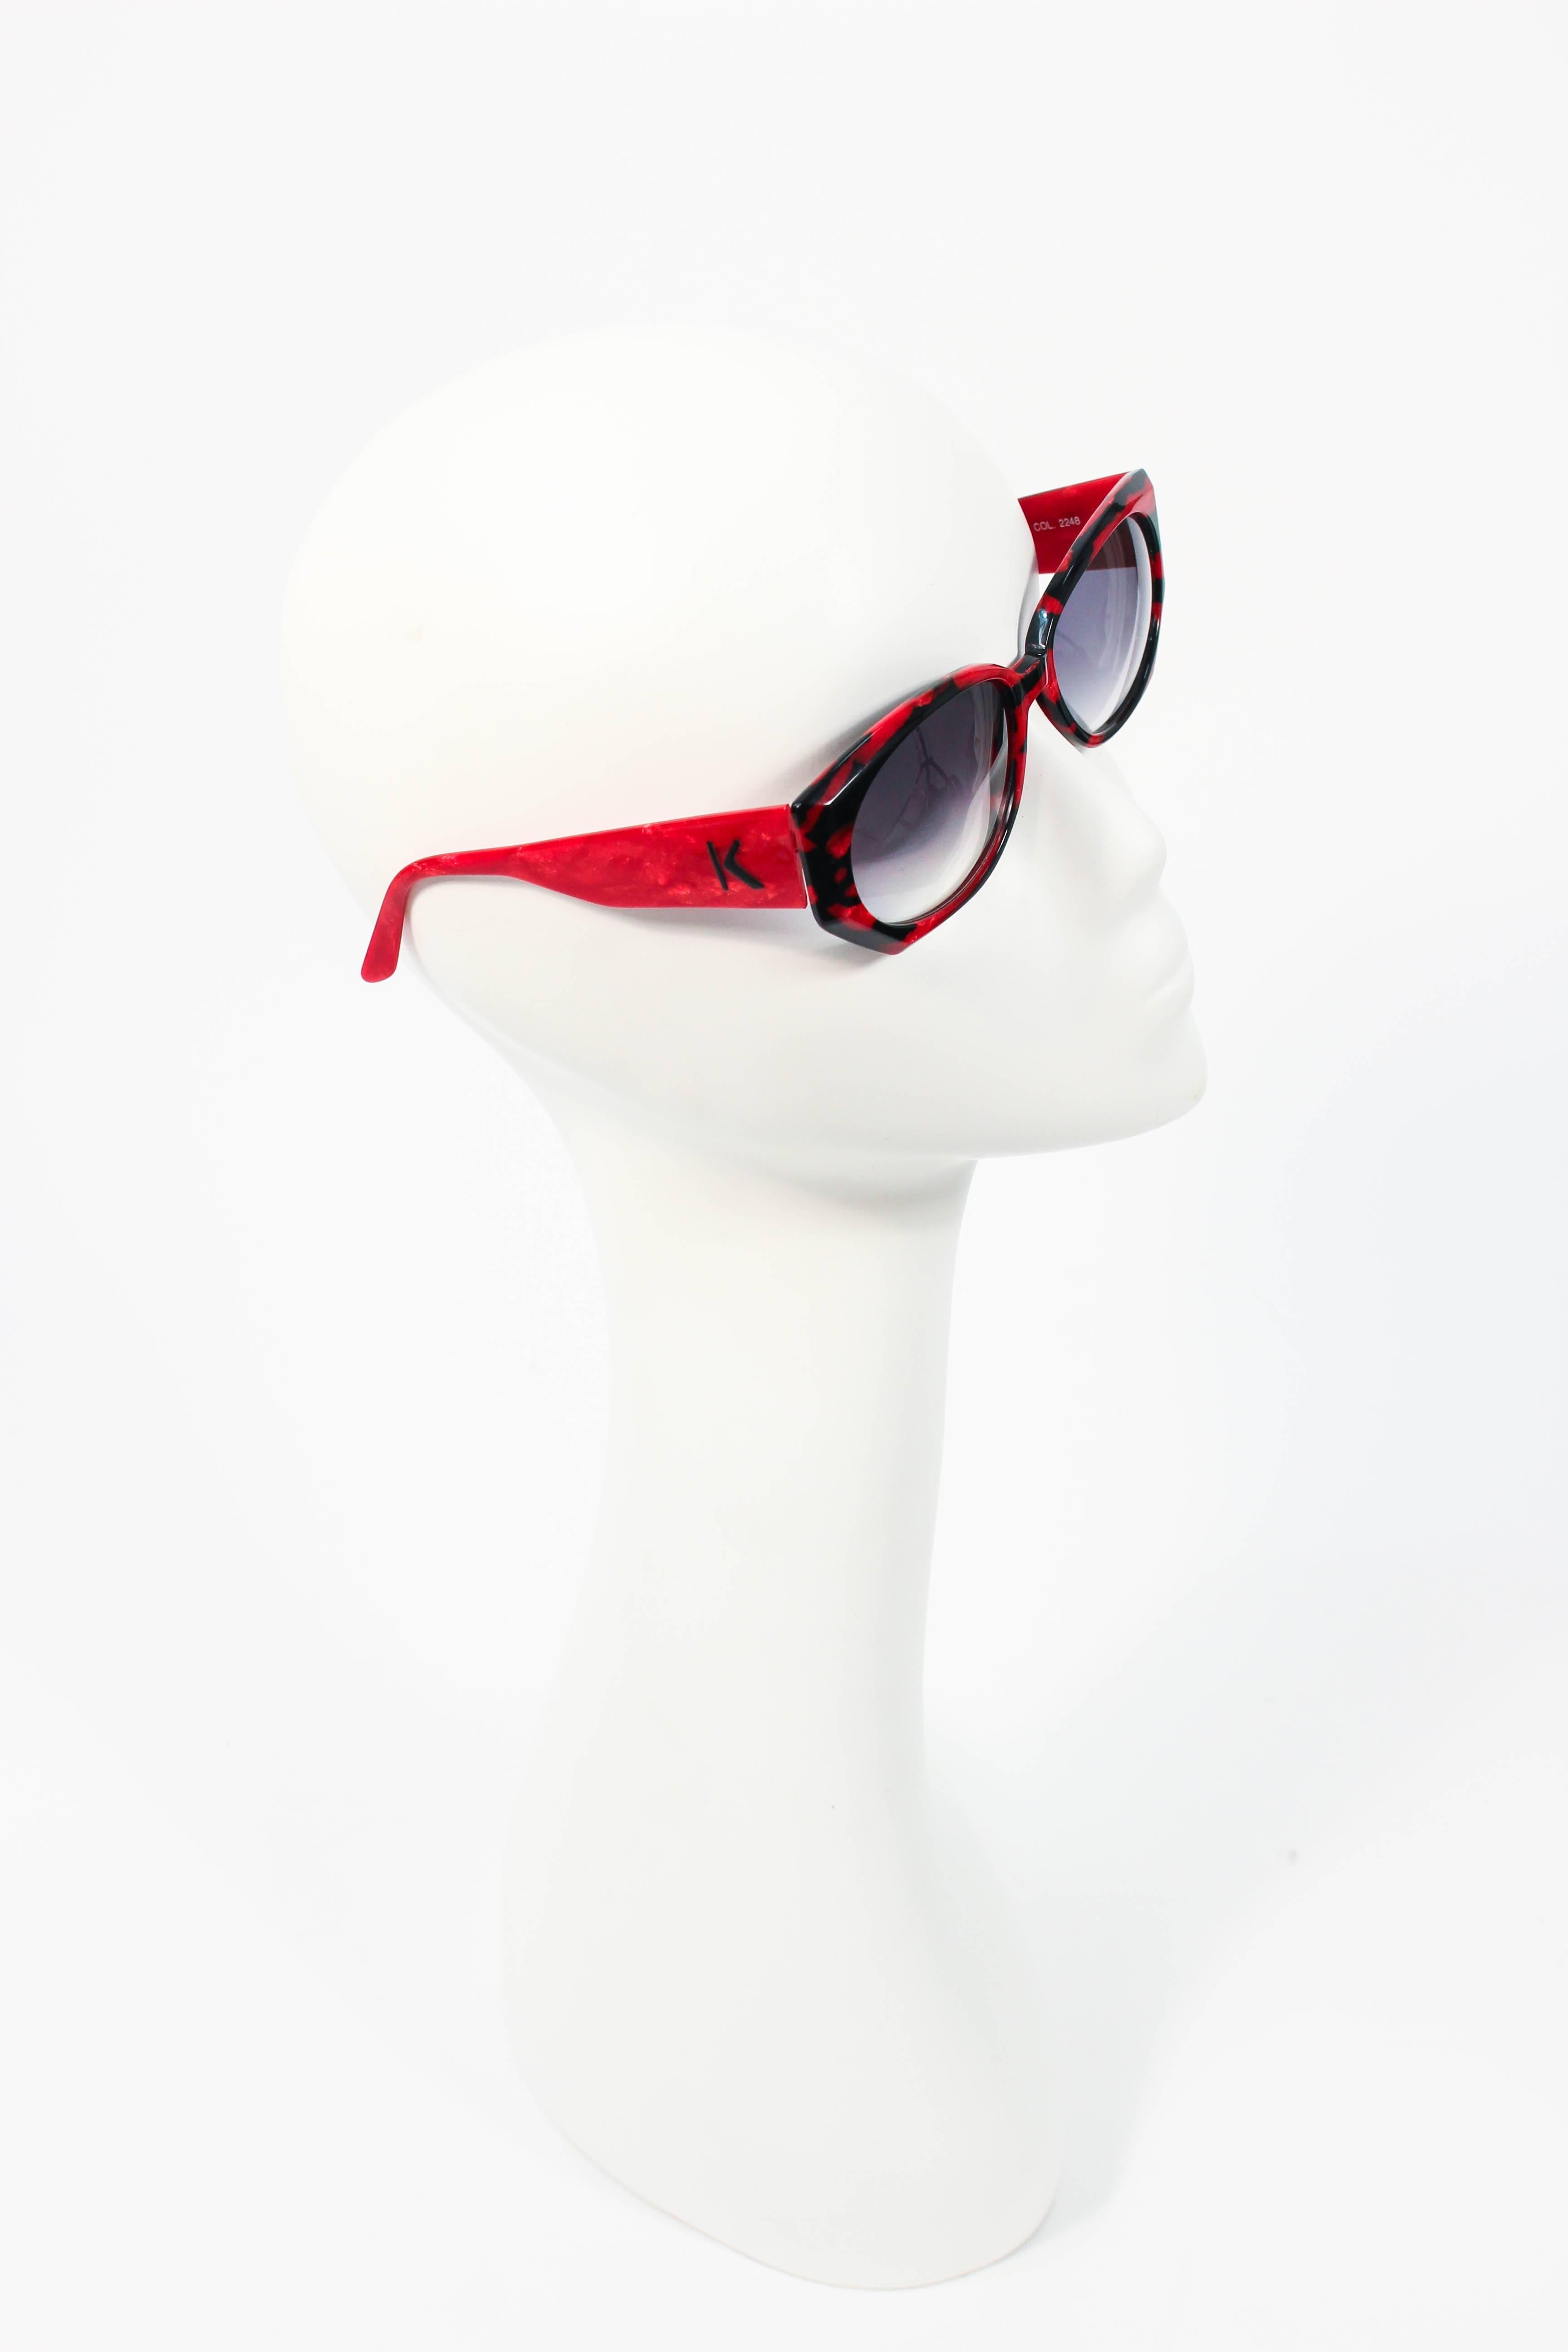 KRIZIA Vintage Black and Red Marbled Sunglasses Large Frame Italie Excellent état - En vente à Los Angeles, CA